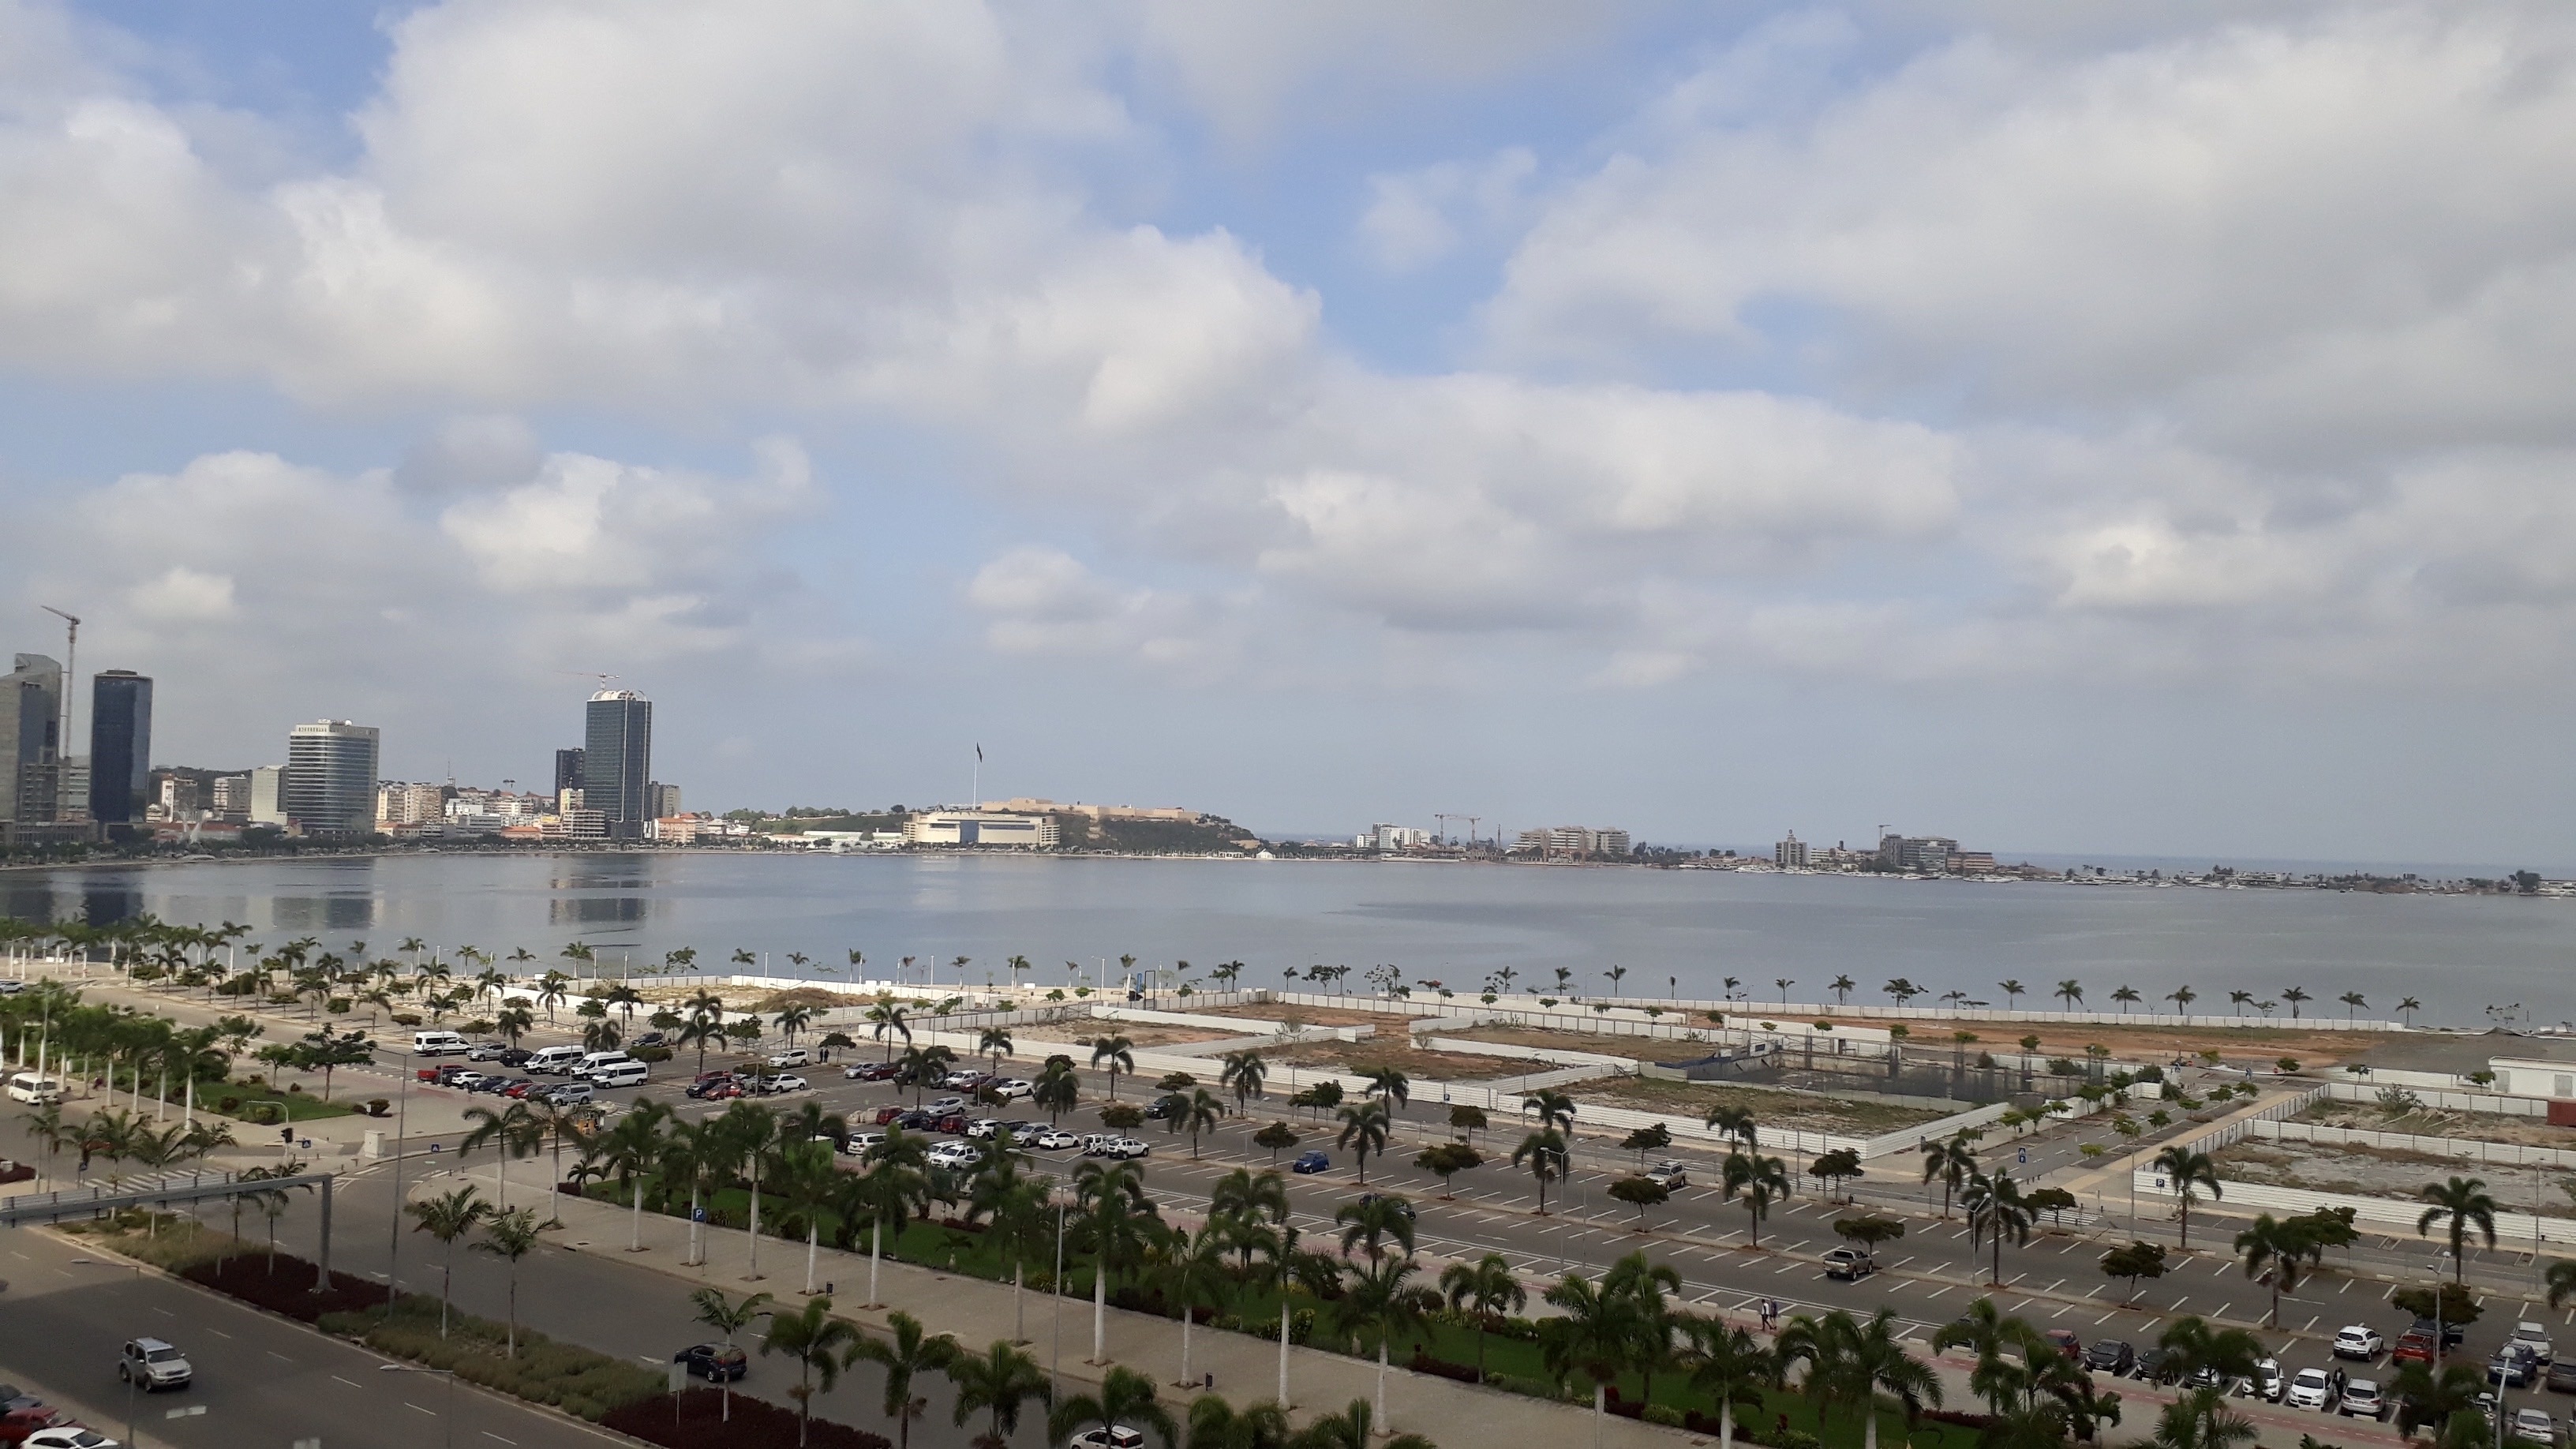 Luanda, Angola travels, Drinking water plant, Suez support, 3270x1840 HD Desktop